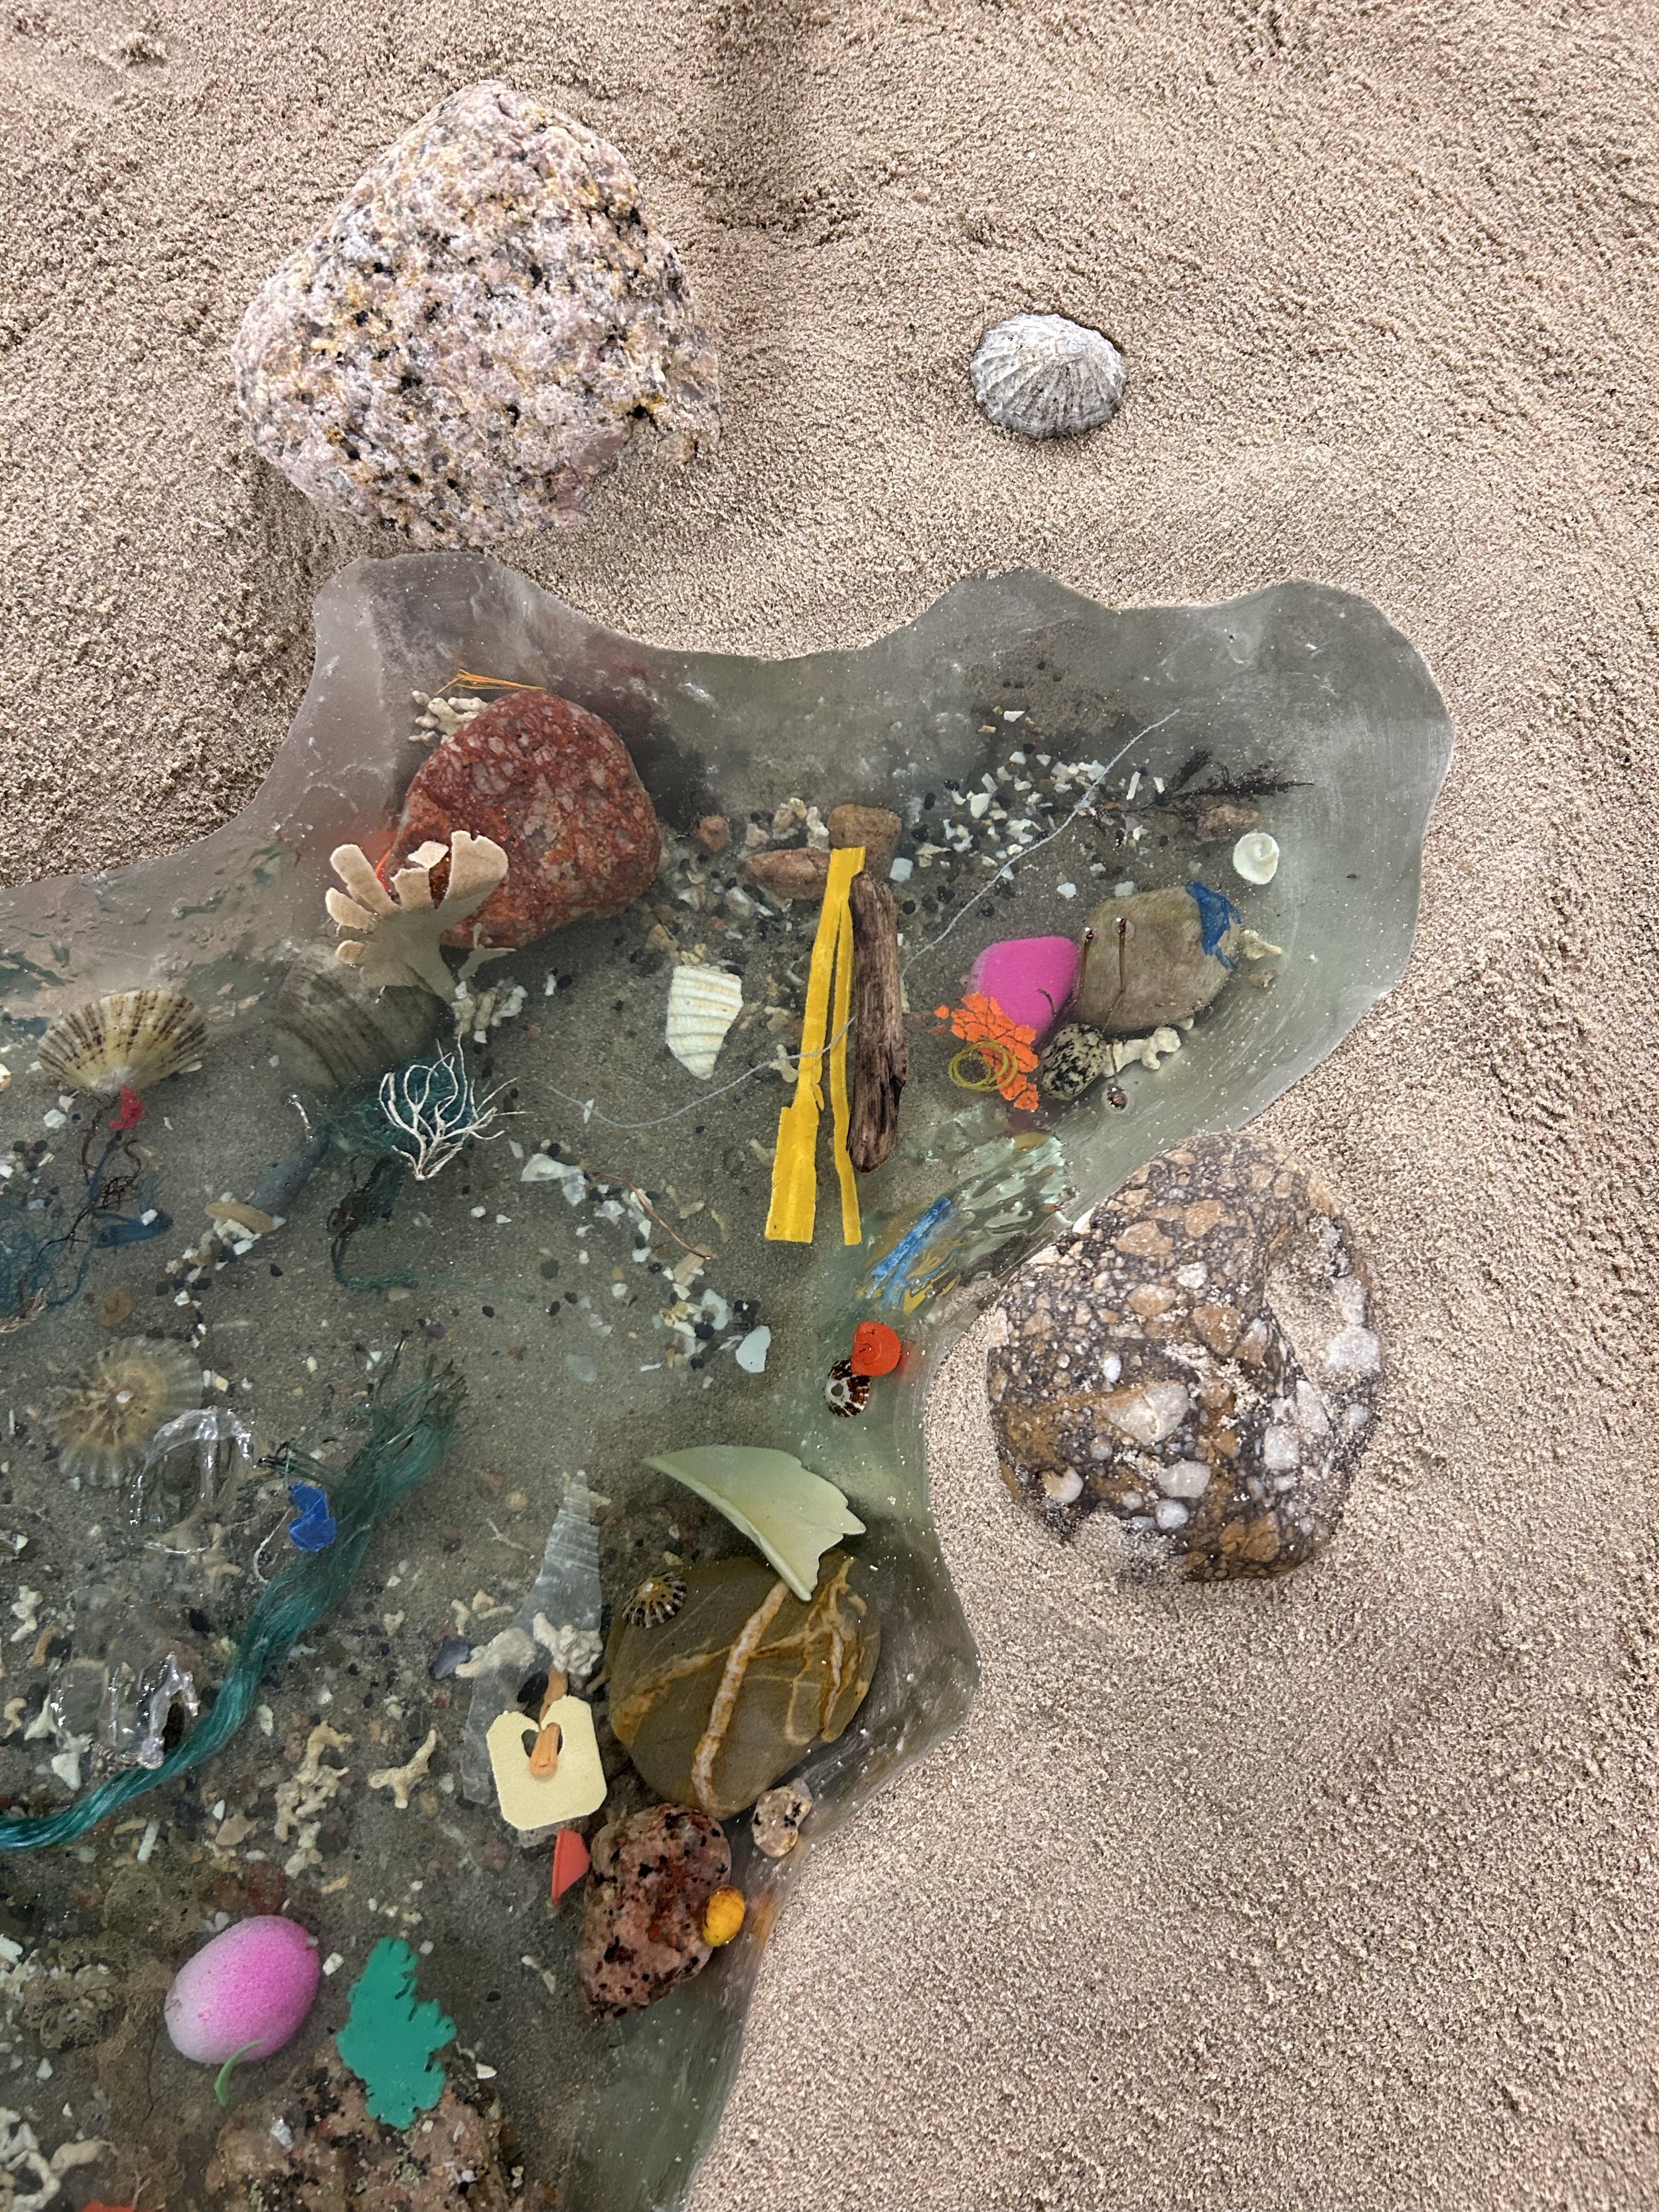  Rock pools - resin, beach plastic, seaweed, rocks, sand Wexford sand, seaweed, driftwood and seaweed 